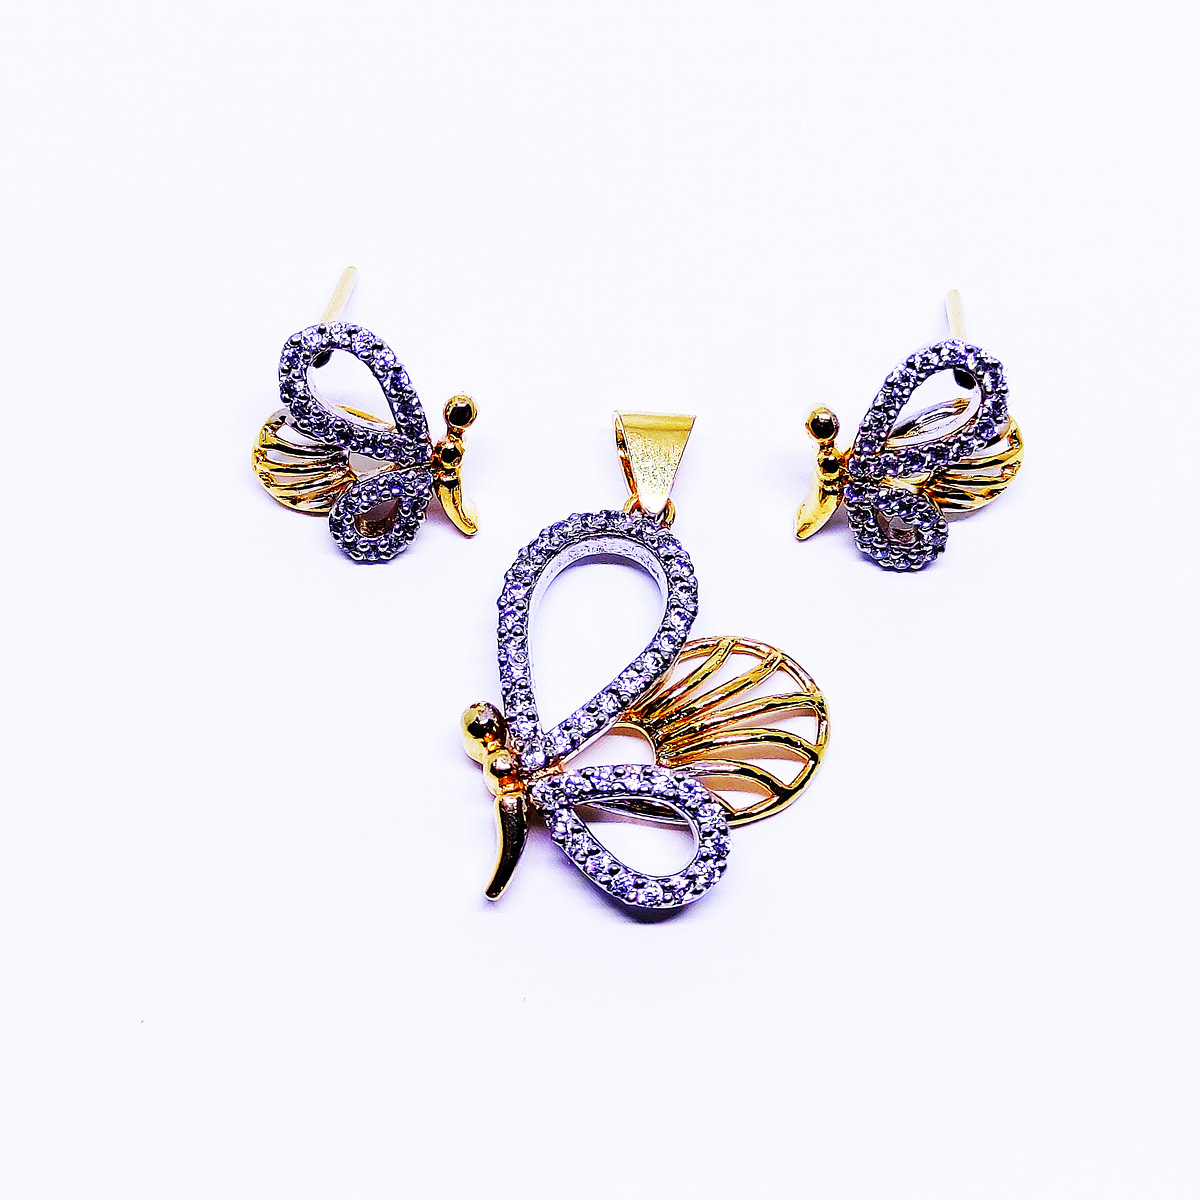 JOOGNOO - Firefly inspired Pendant with Earrings